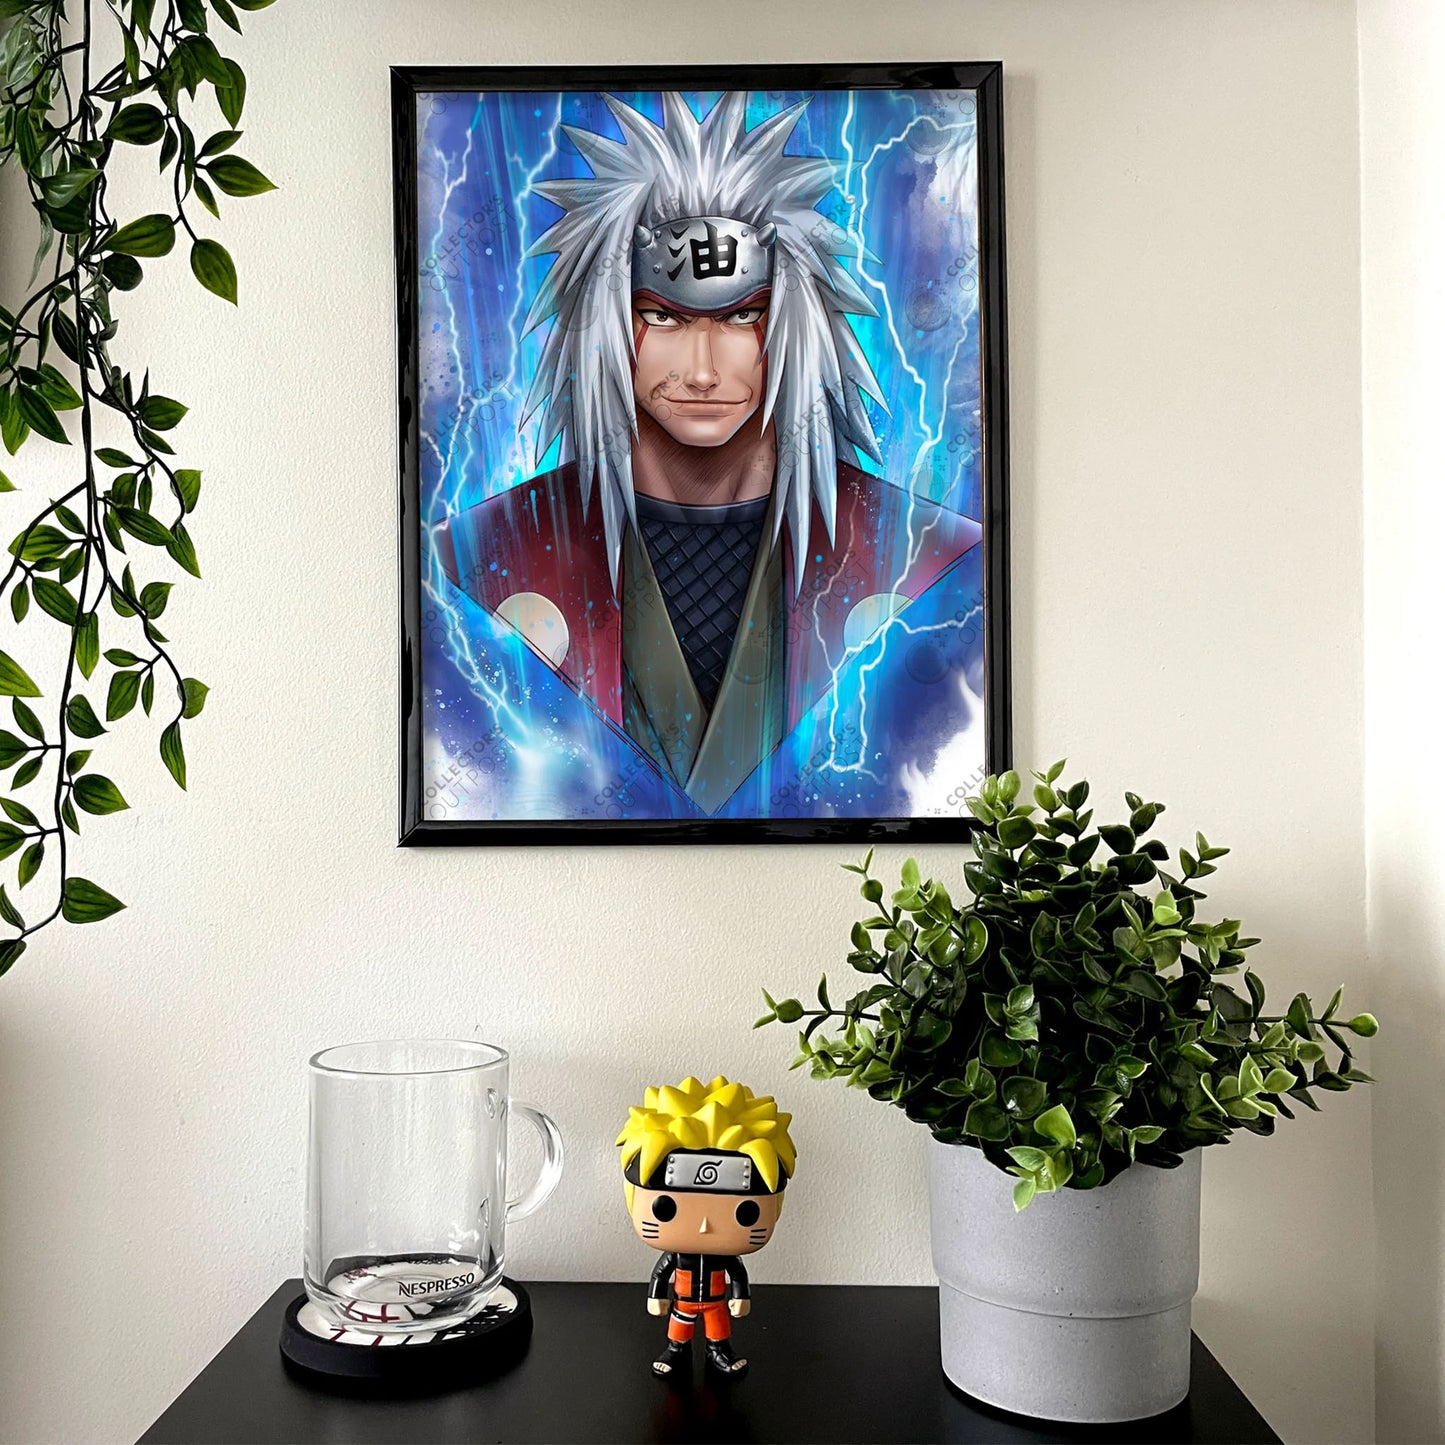 Jiraiya "Natural Energy" (Naruto) Legacy Portrait Art Print